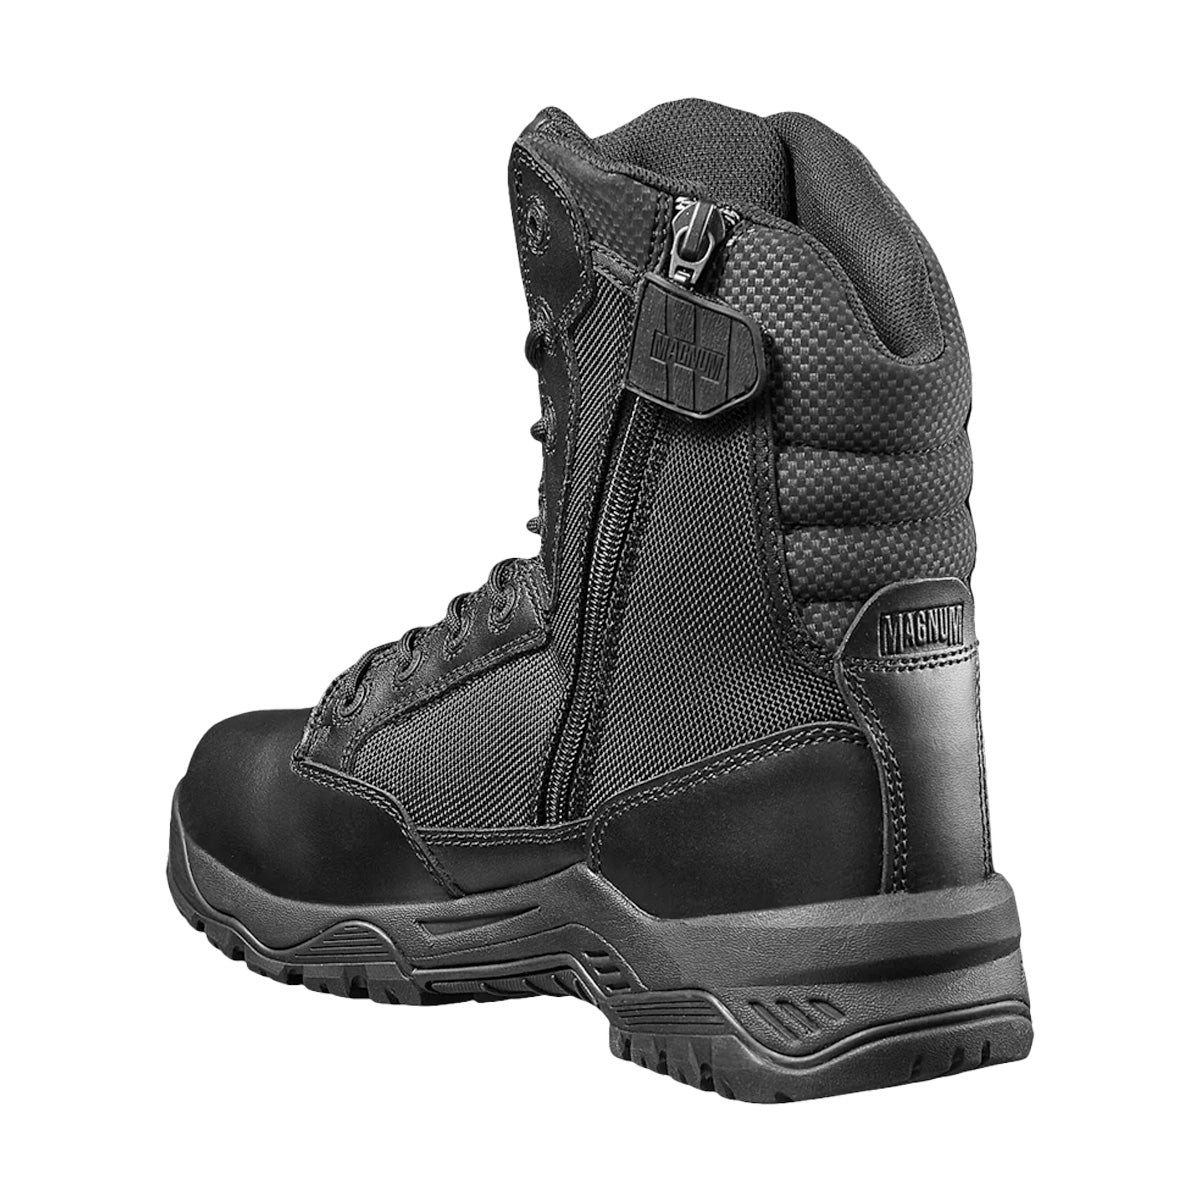 Magnum Strike Force 8.0 Side-Zip Boot Black Footwear Magnum Footwear Tactical Gear Supplier Tactical Distributors Australia